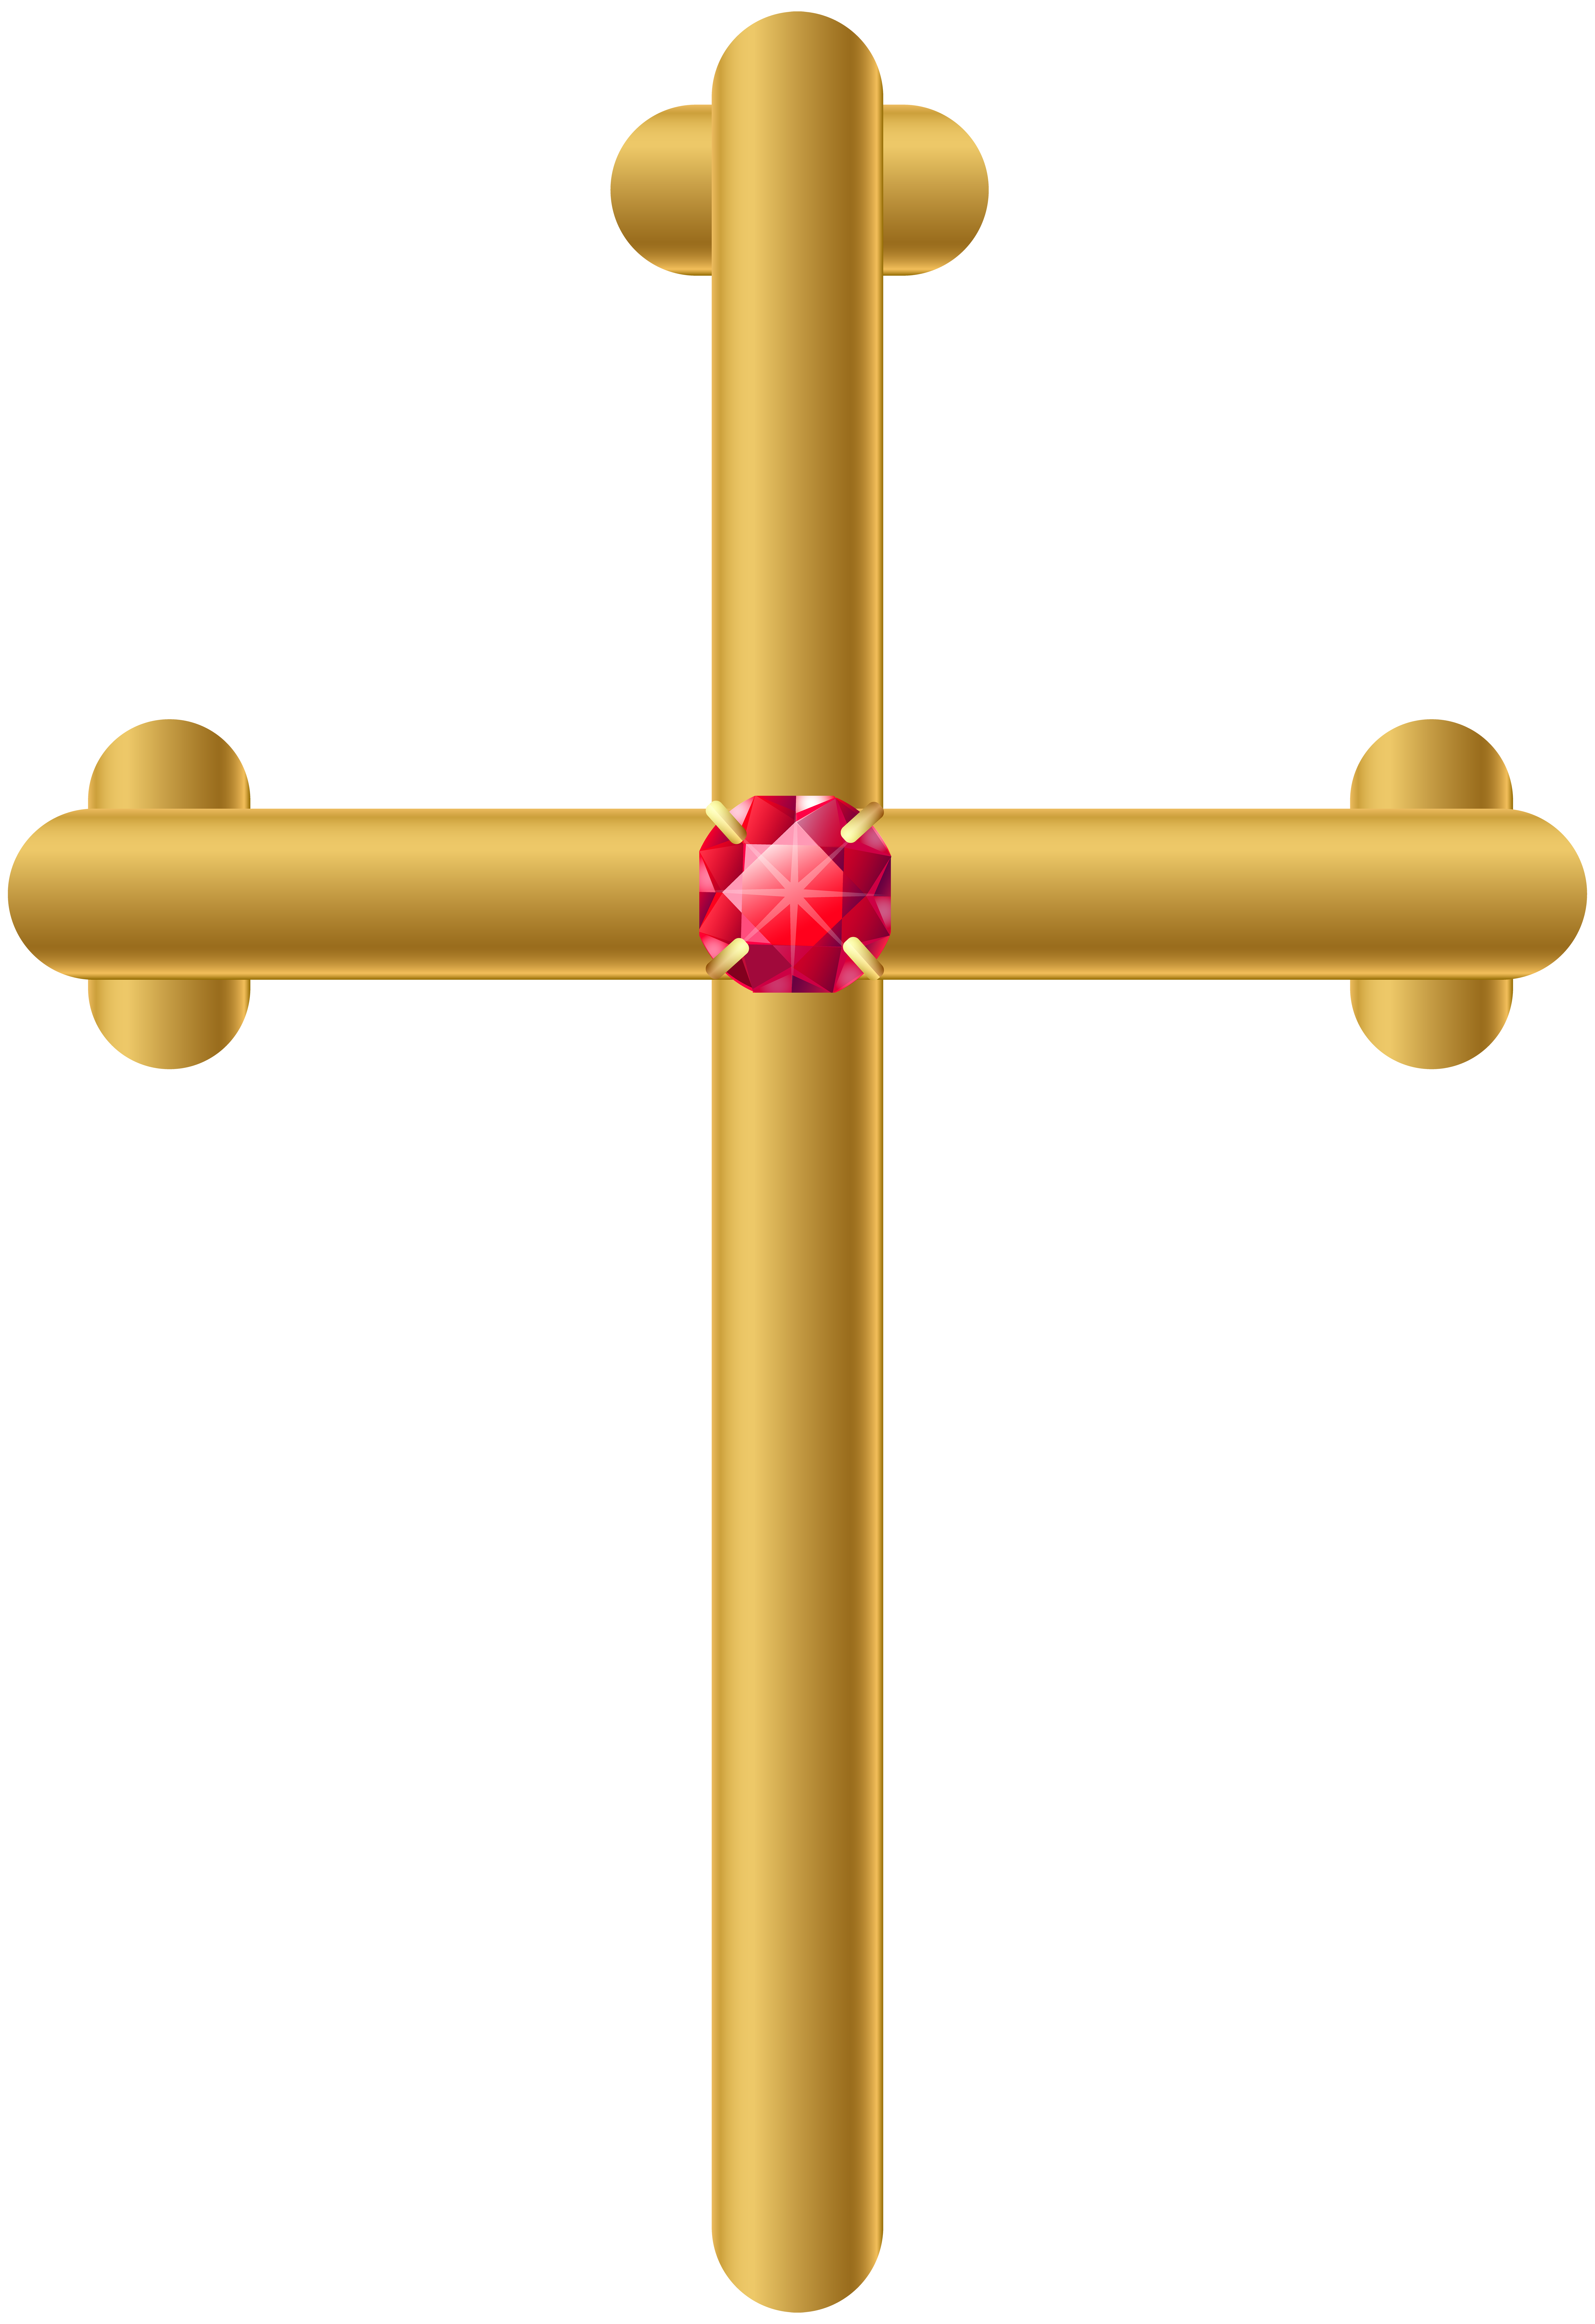 Golden Cross PNG Clip Art Image